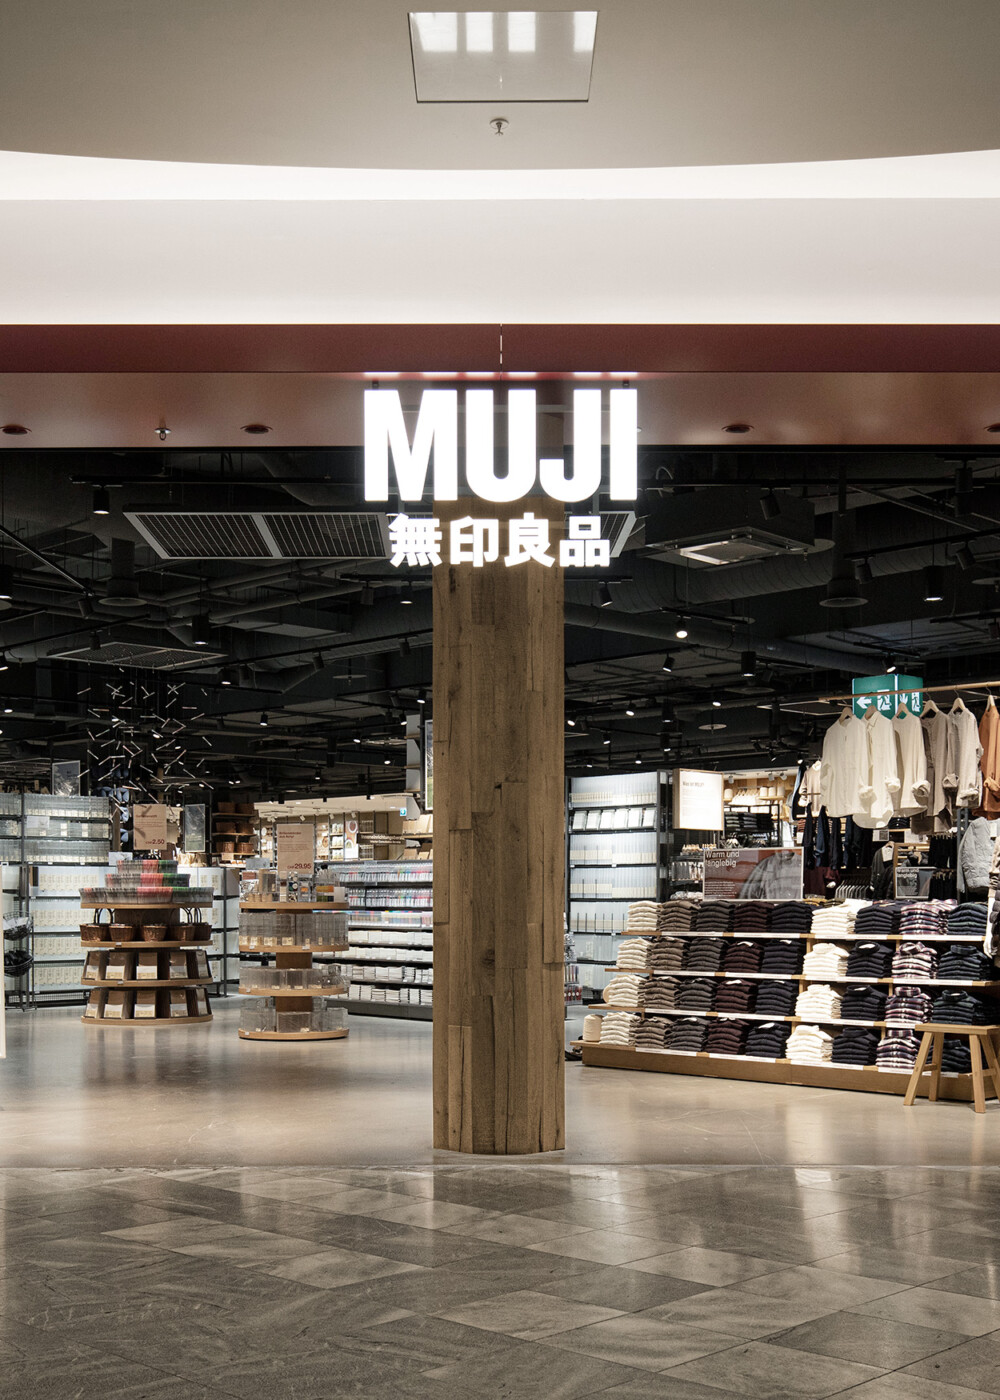 Mint Archi­tec­tu­re Pro­jects Work Brands Life­style Muji Store Glatt­zen­trum Zurich Ein­gangs­be­reich 2